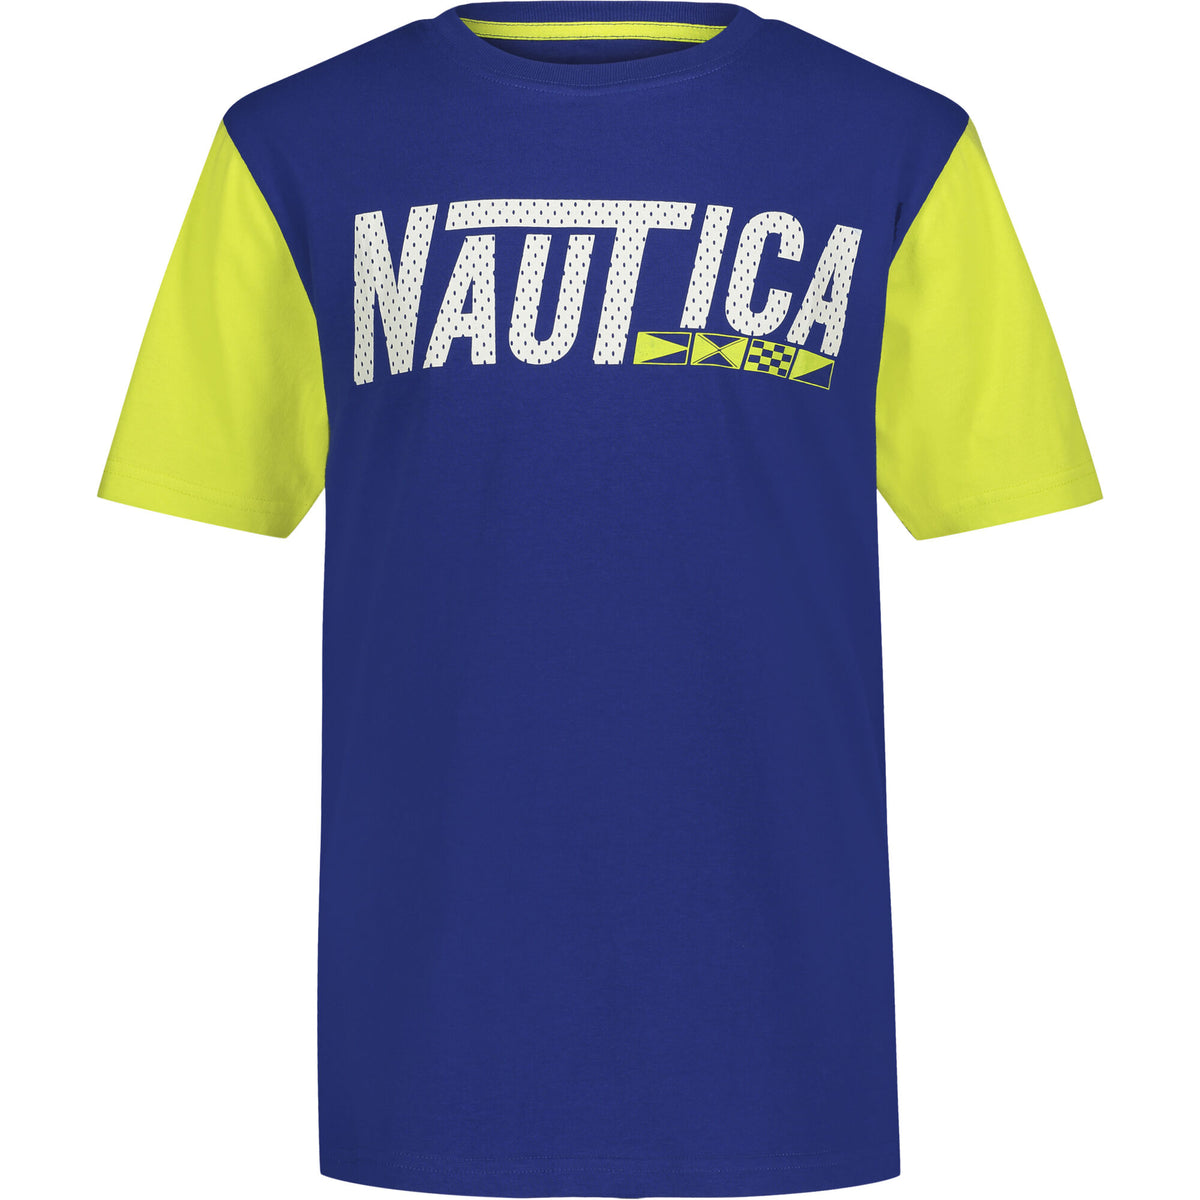 Nautica Toddler Boys' Nautica Mesh Logo T-Shirt (2T-4T) Anchor Blue Heather